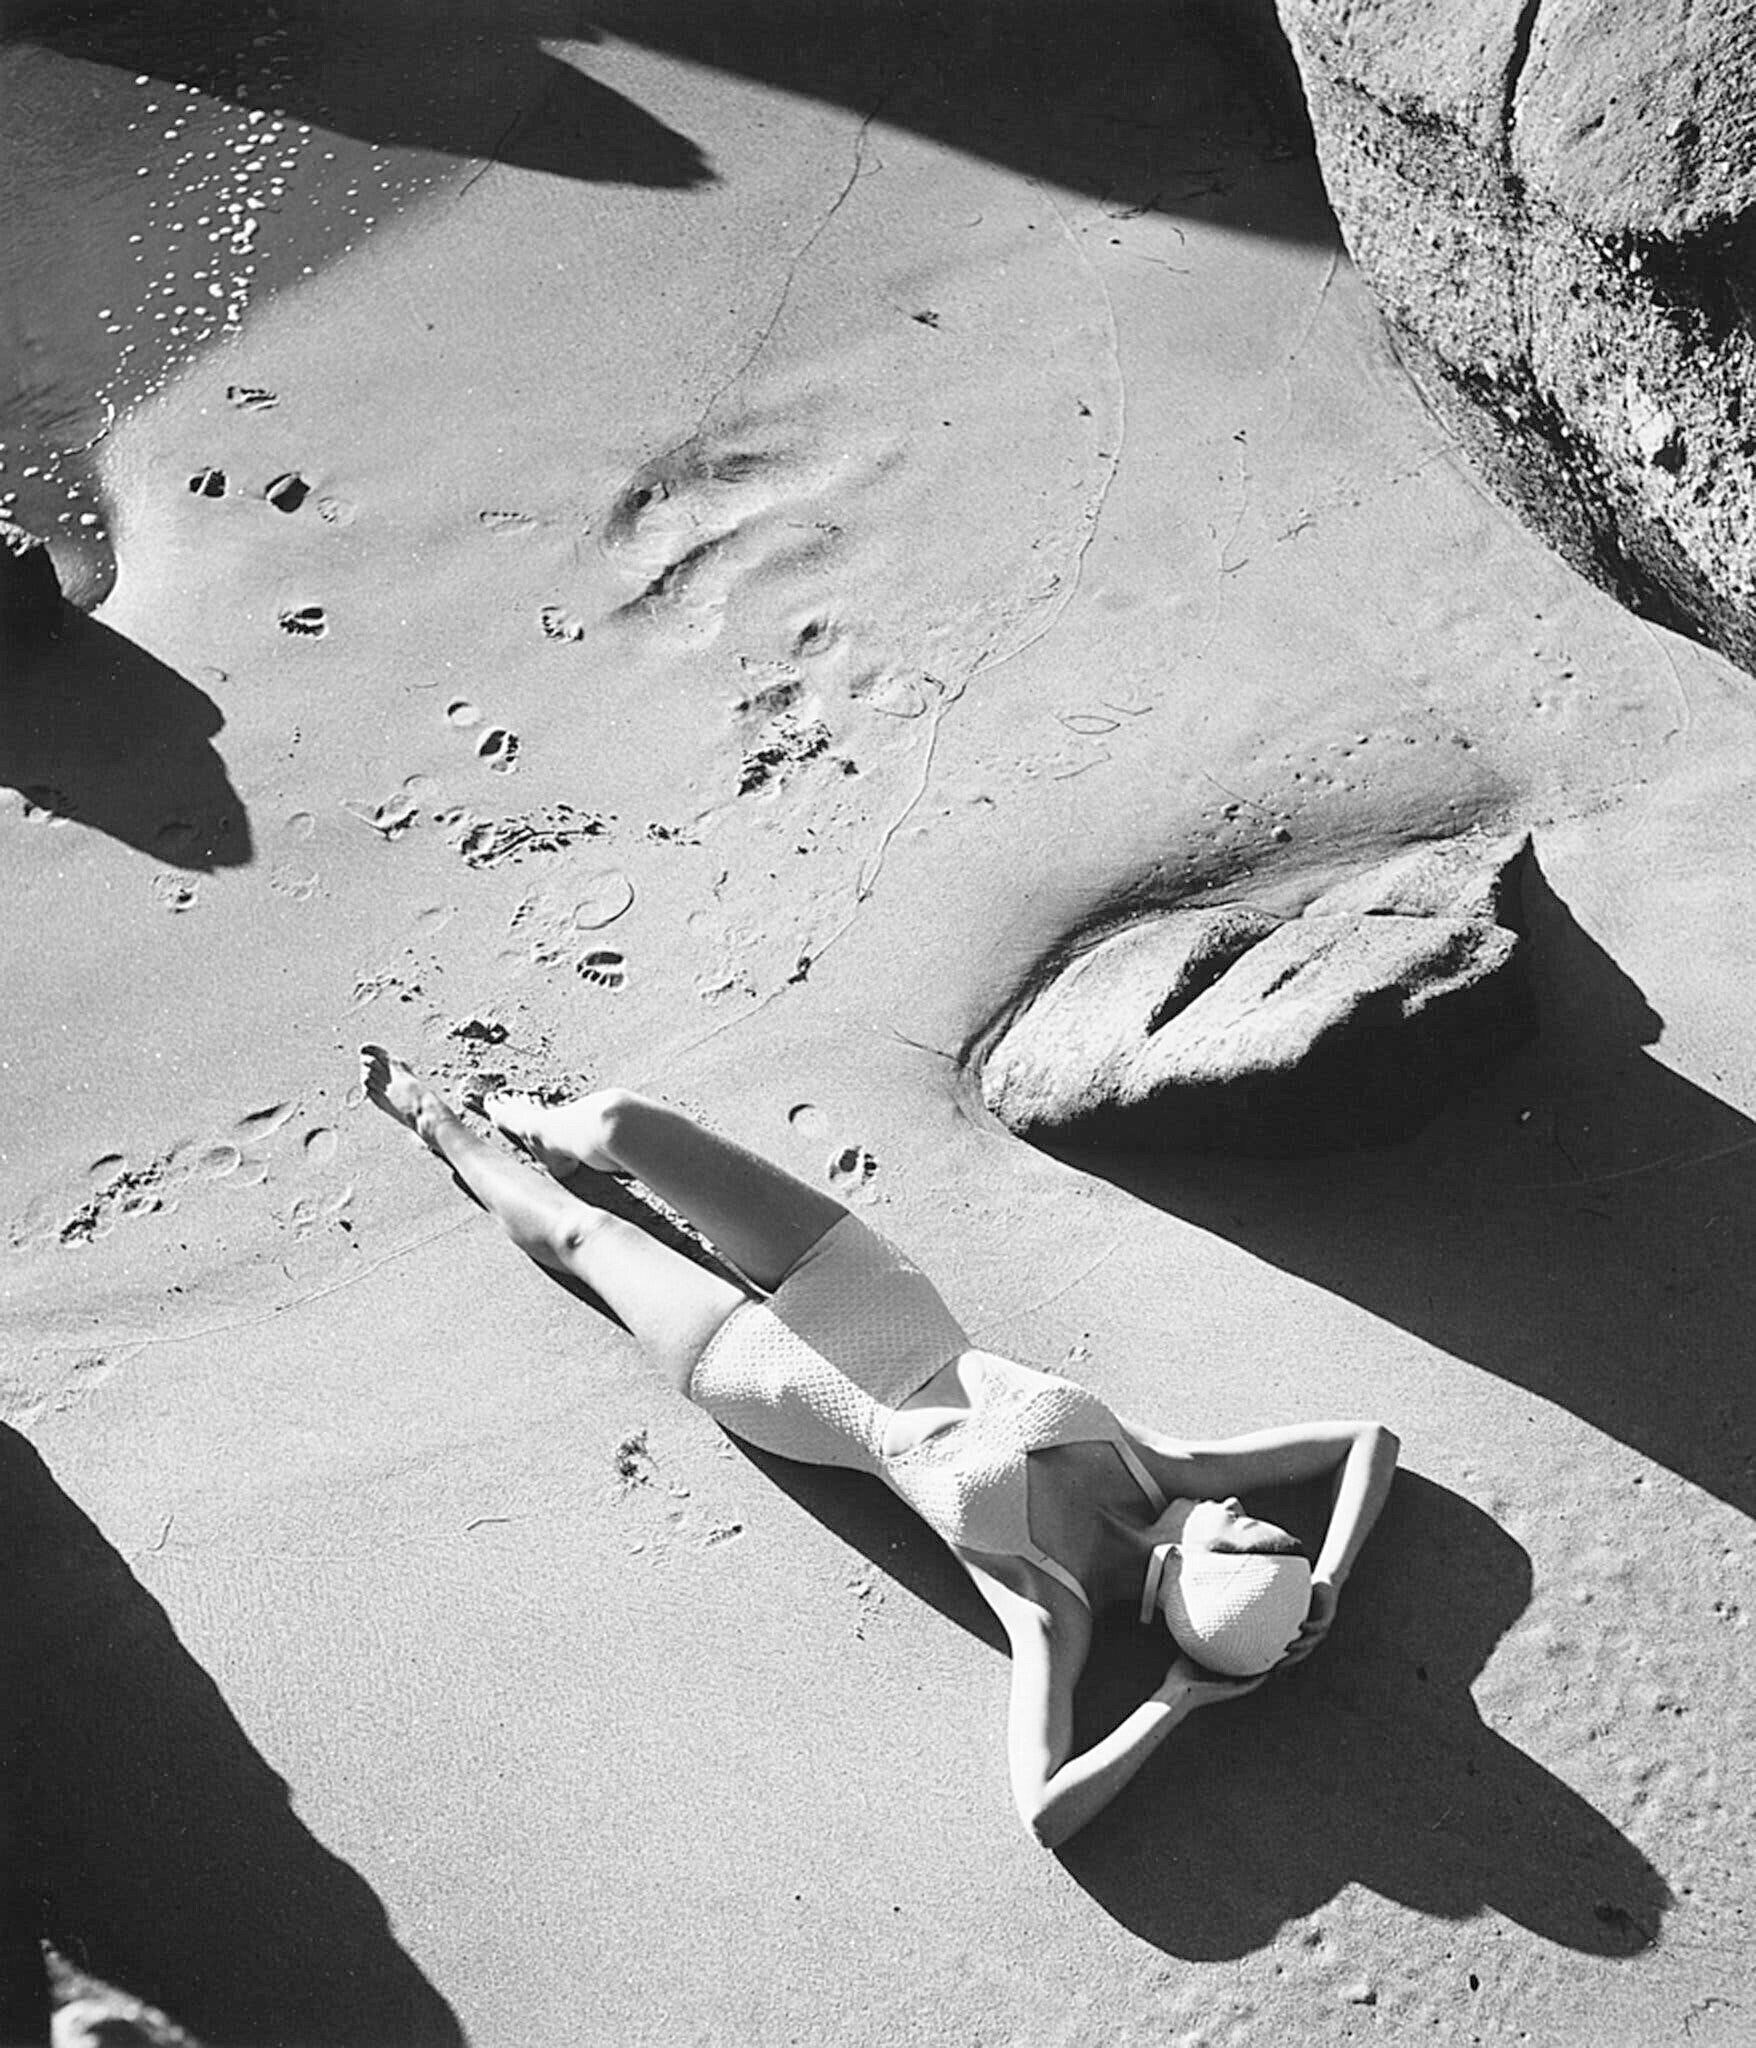 Louise Dahl-Wolfe, Rubber Bathing Suit, California, 1940.